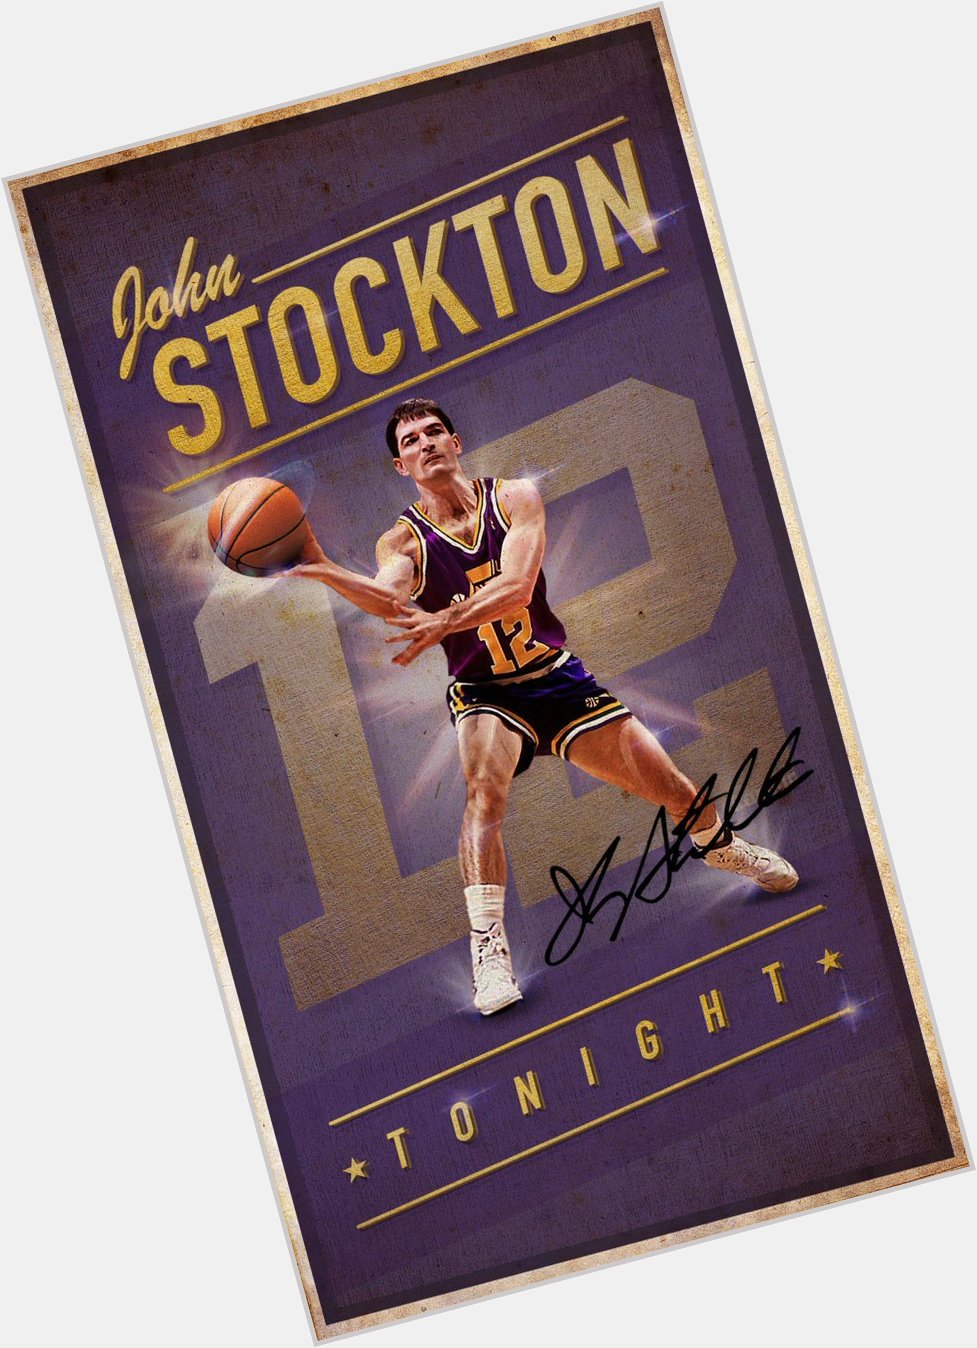 Happy Birthday John Stockton! 